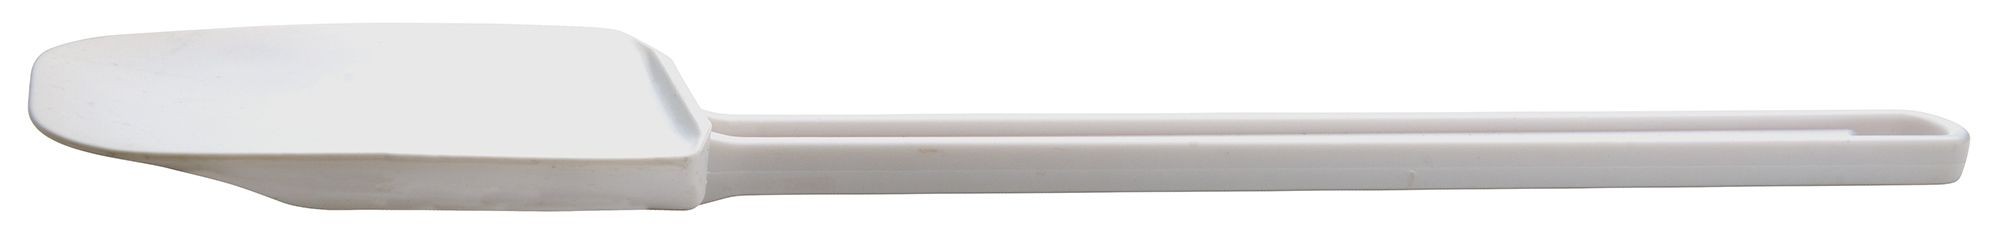 Winco PSGE-16 16" White Bowl Shaped Plastic Scraper